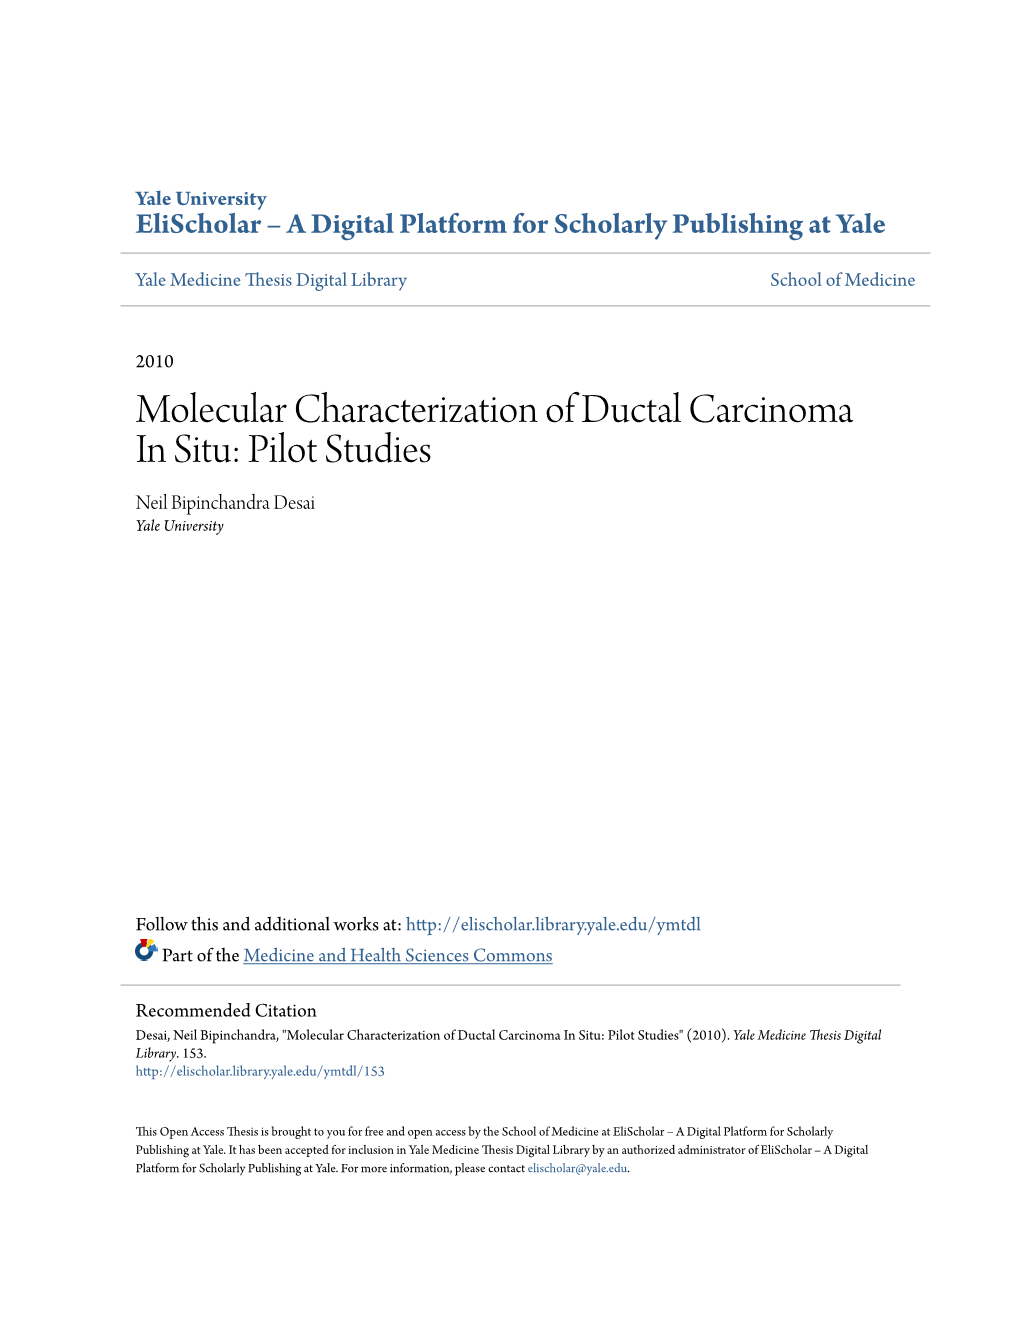 Molecular Characterization of Ductal Carcinoma in Situ: Pilot Studies Neil Bipinchandra Desai Yale University